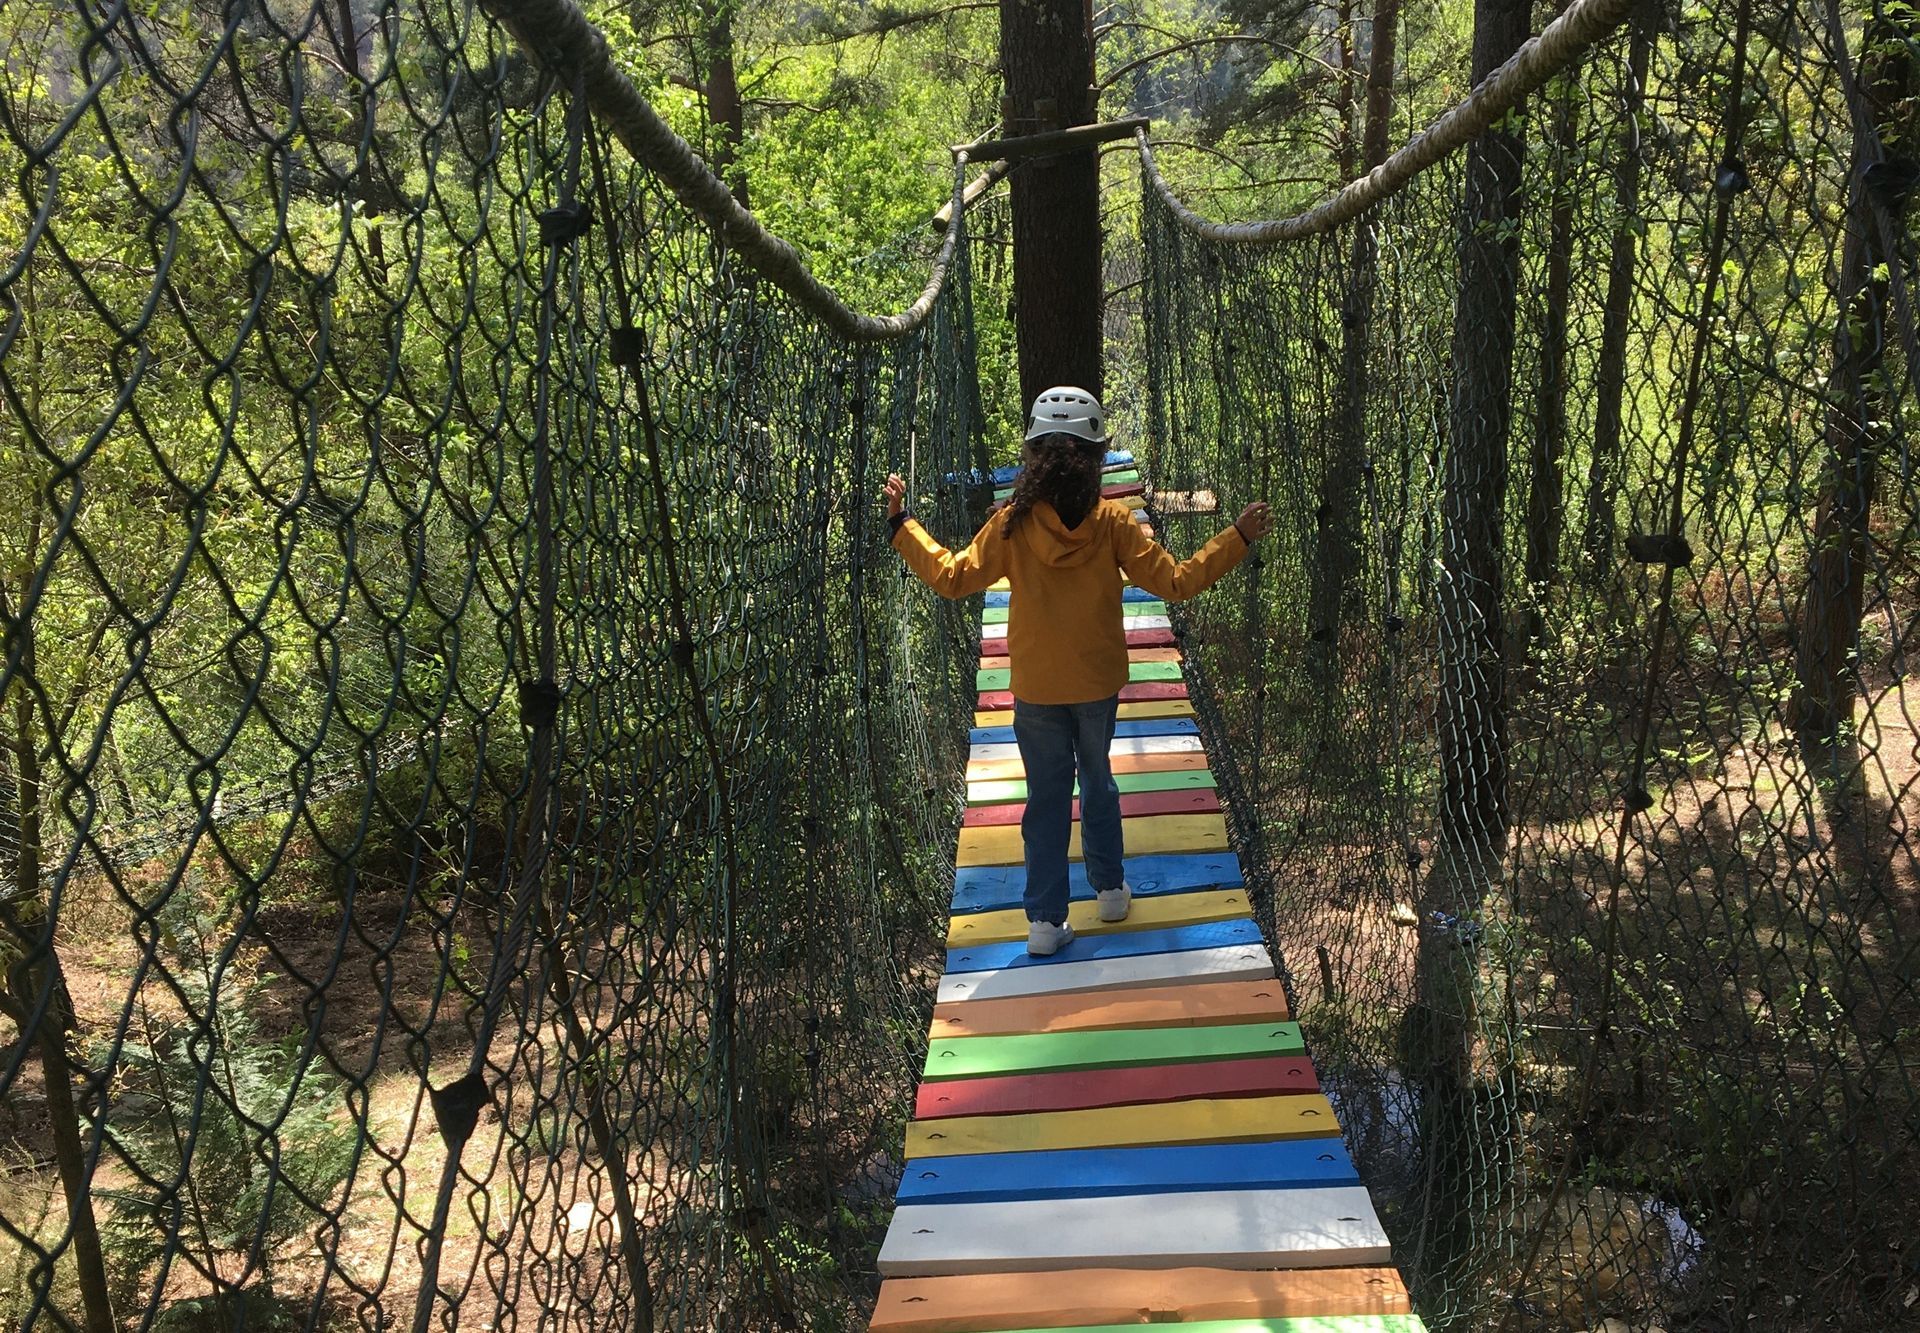 menina percorre curiosa a ponte colorida no bosque encantado no pena aventura